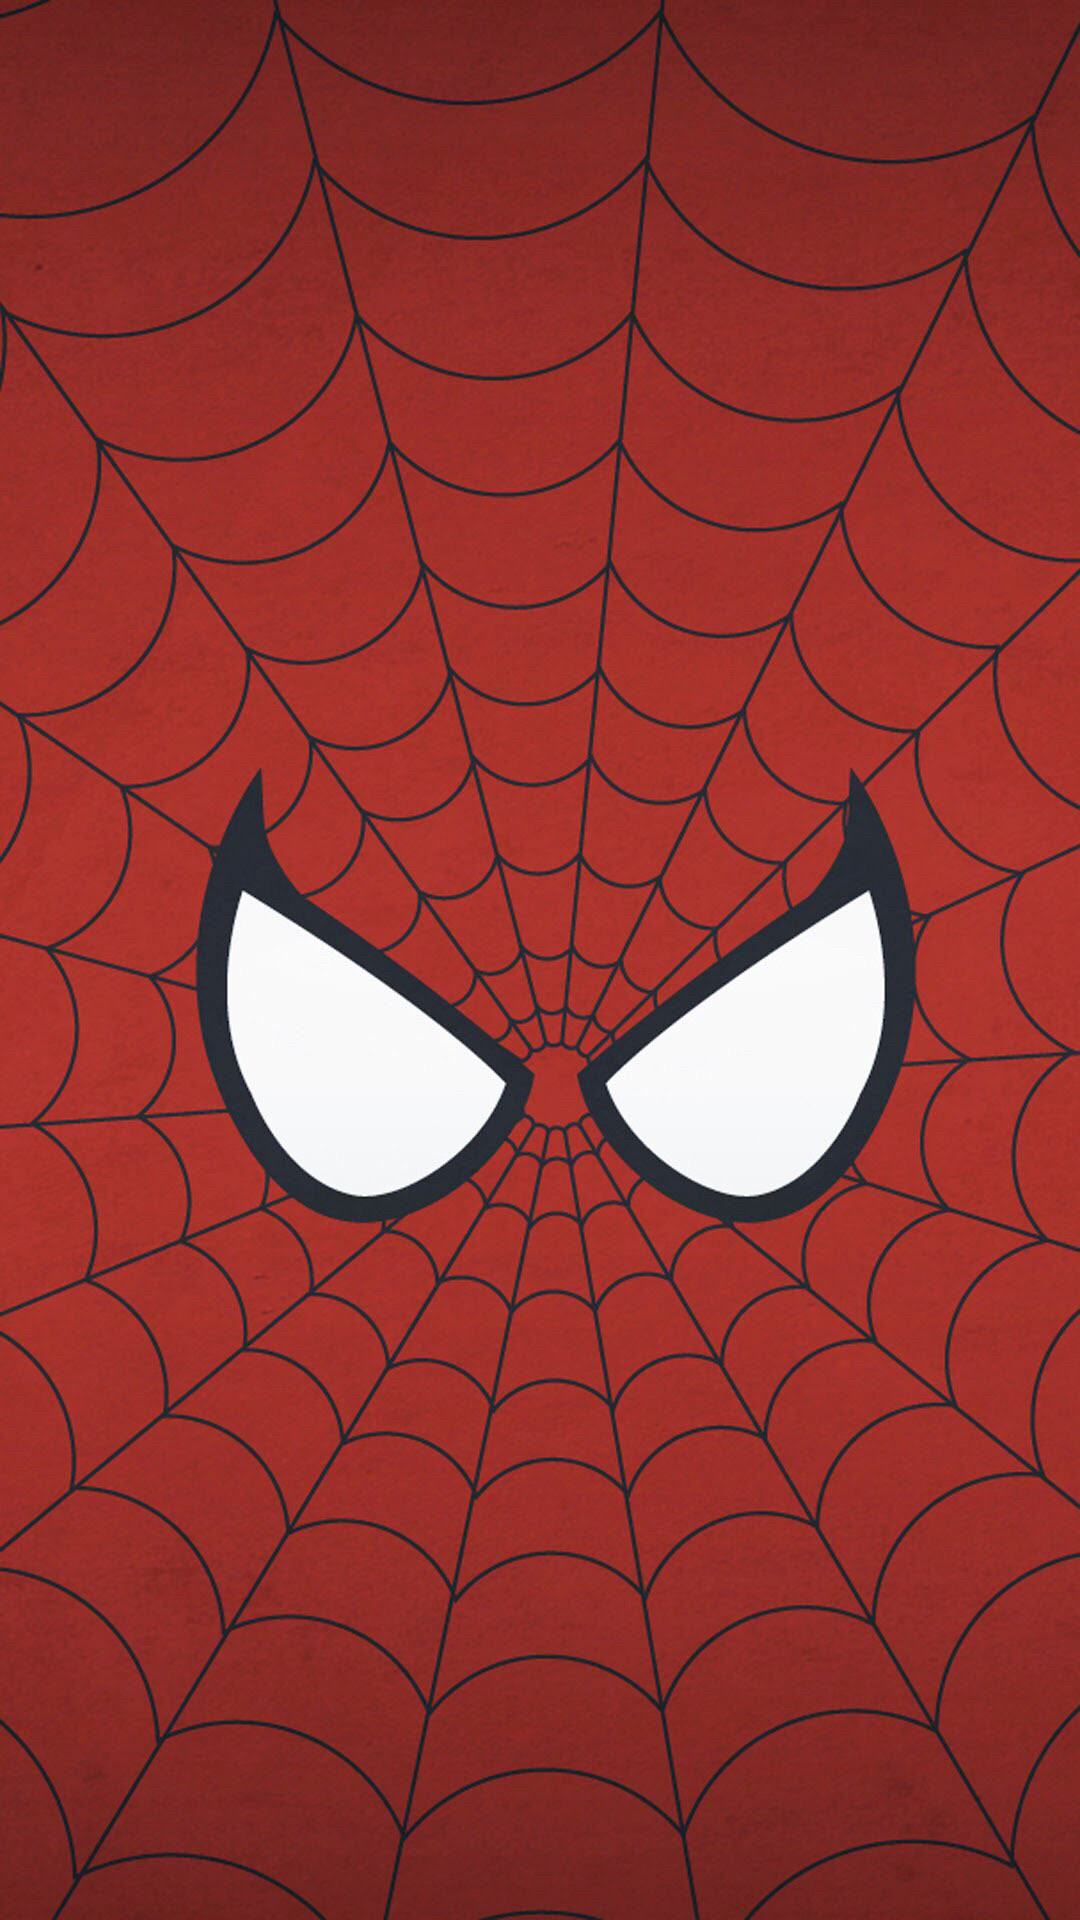 Best 25 Spiderman wallpapers ideas on Pinterest El hombre araa 2017, Spiderman and Trajes de spiderman